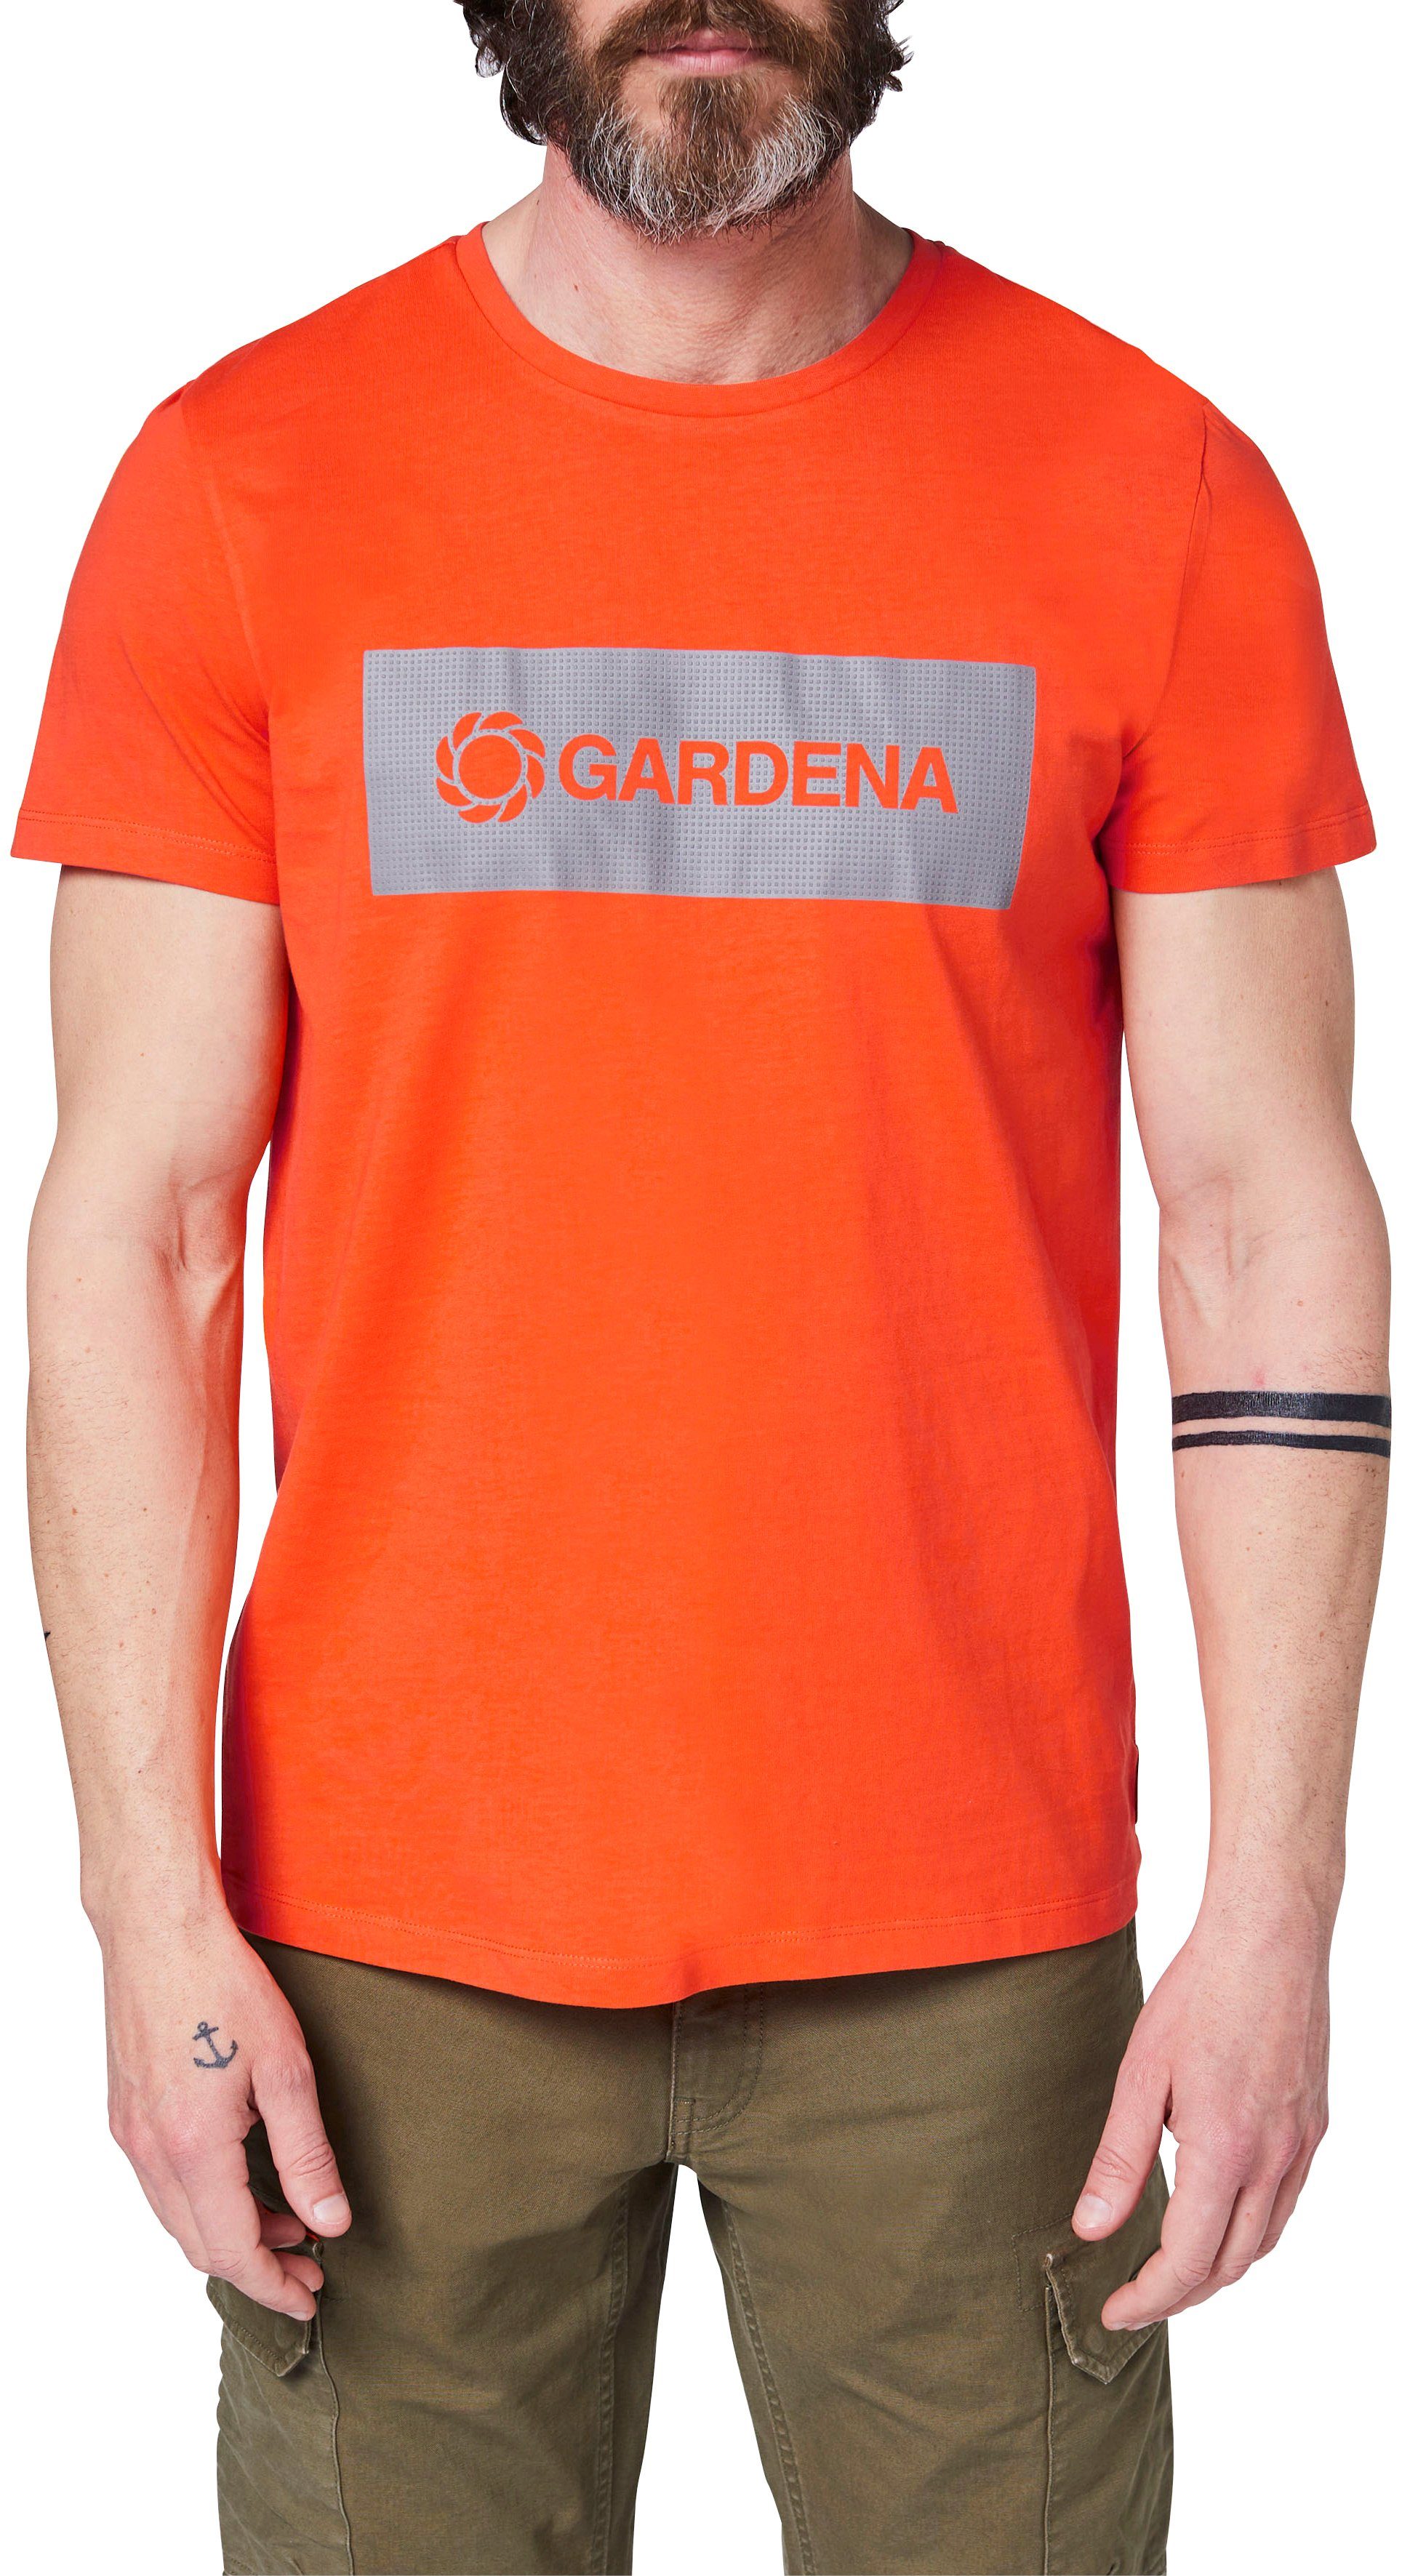 GARDENA T-Shirt Flame mit Gardena-Logodruck